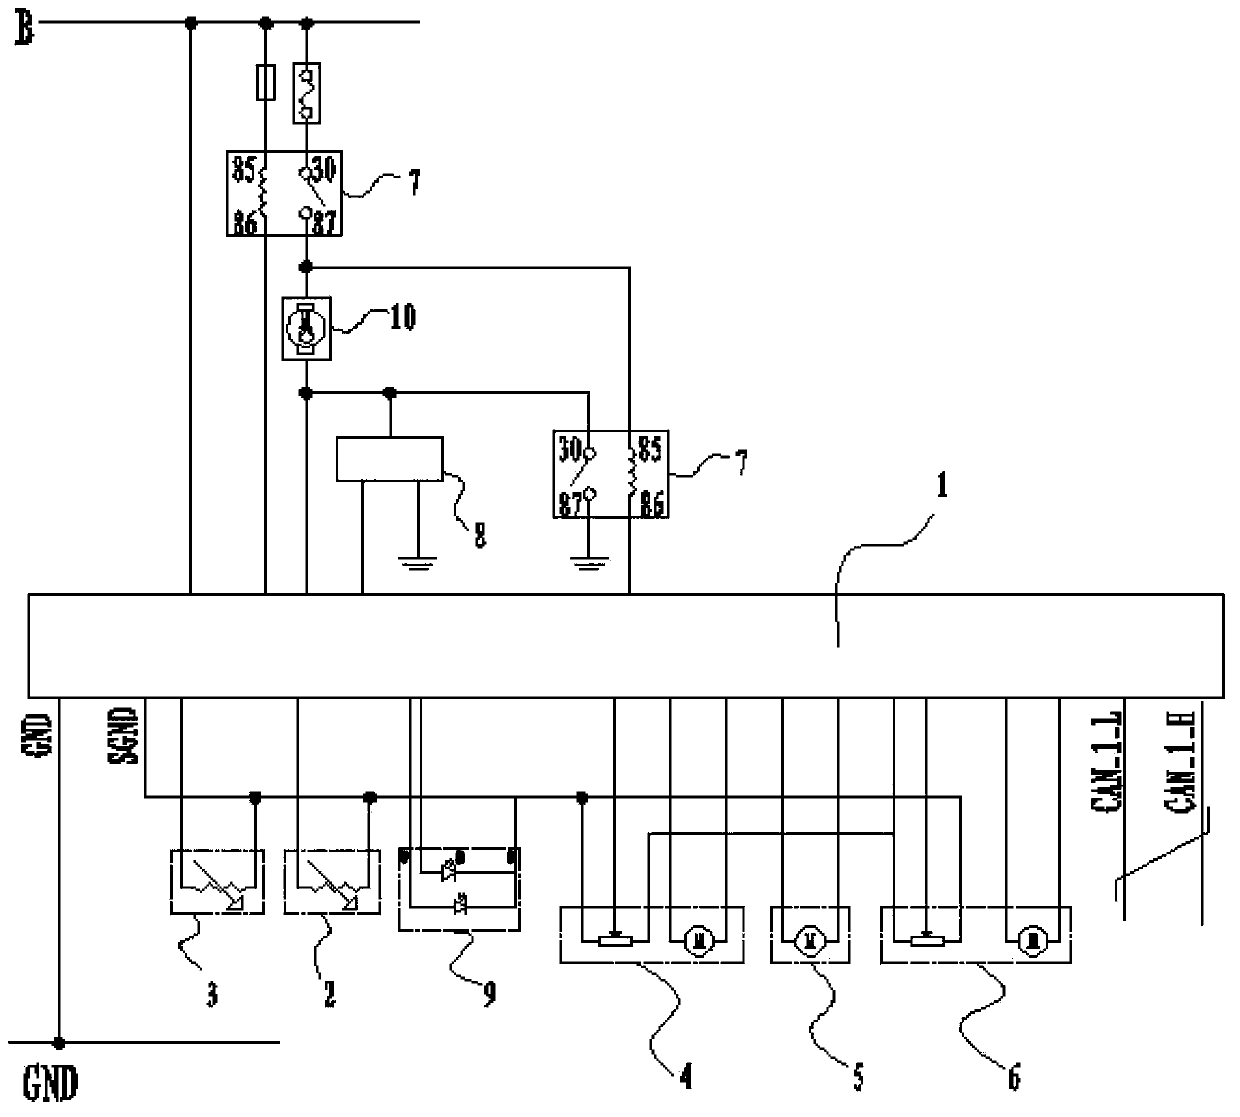 Automobile temperature pre-regulation control system and control method for regulating temperature in compartment